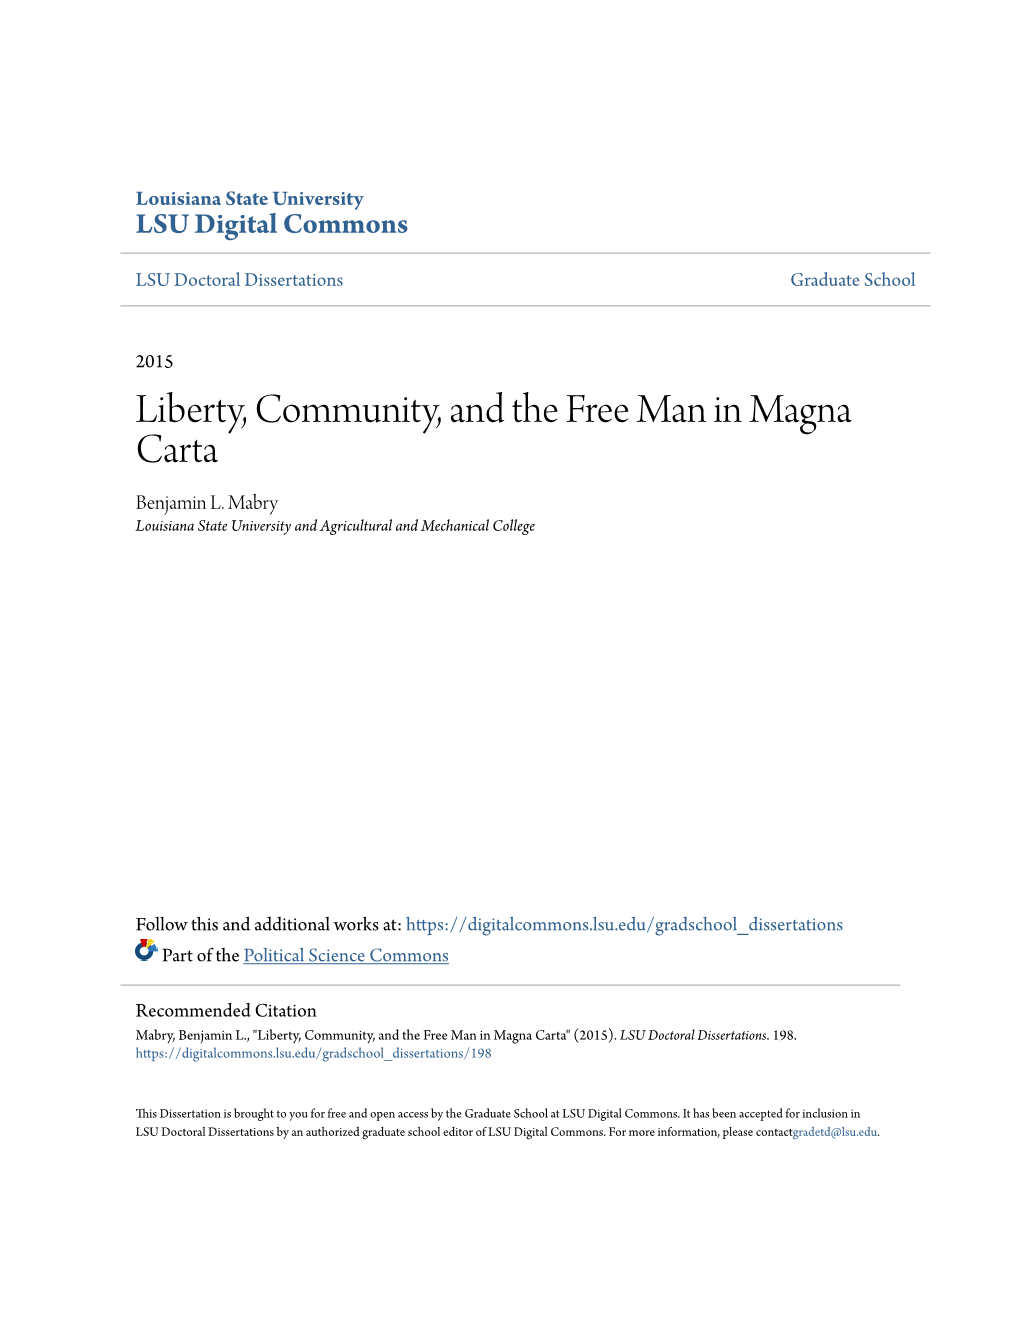 Liberty, Community, and the Free Man in Magna Carta Benjamin L